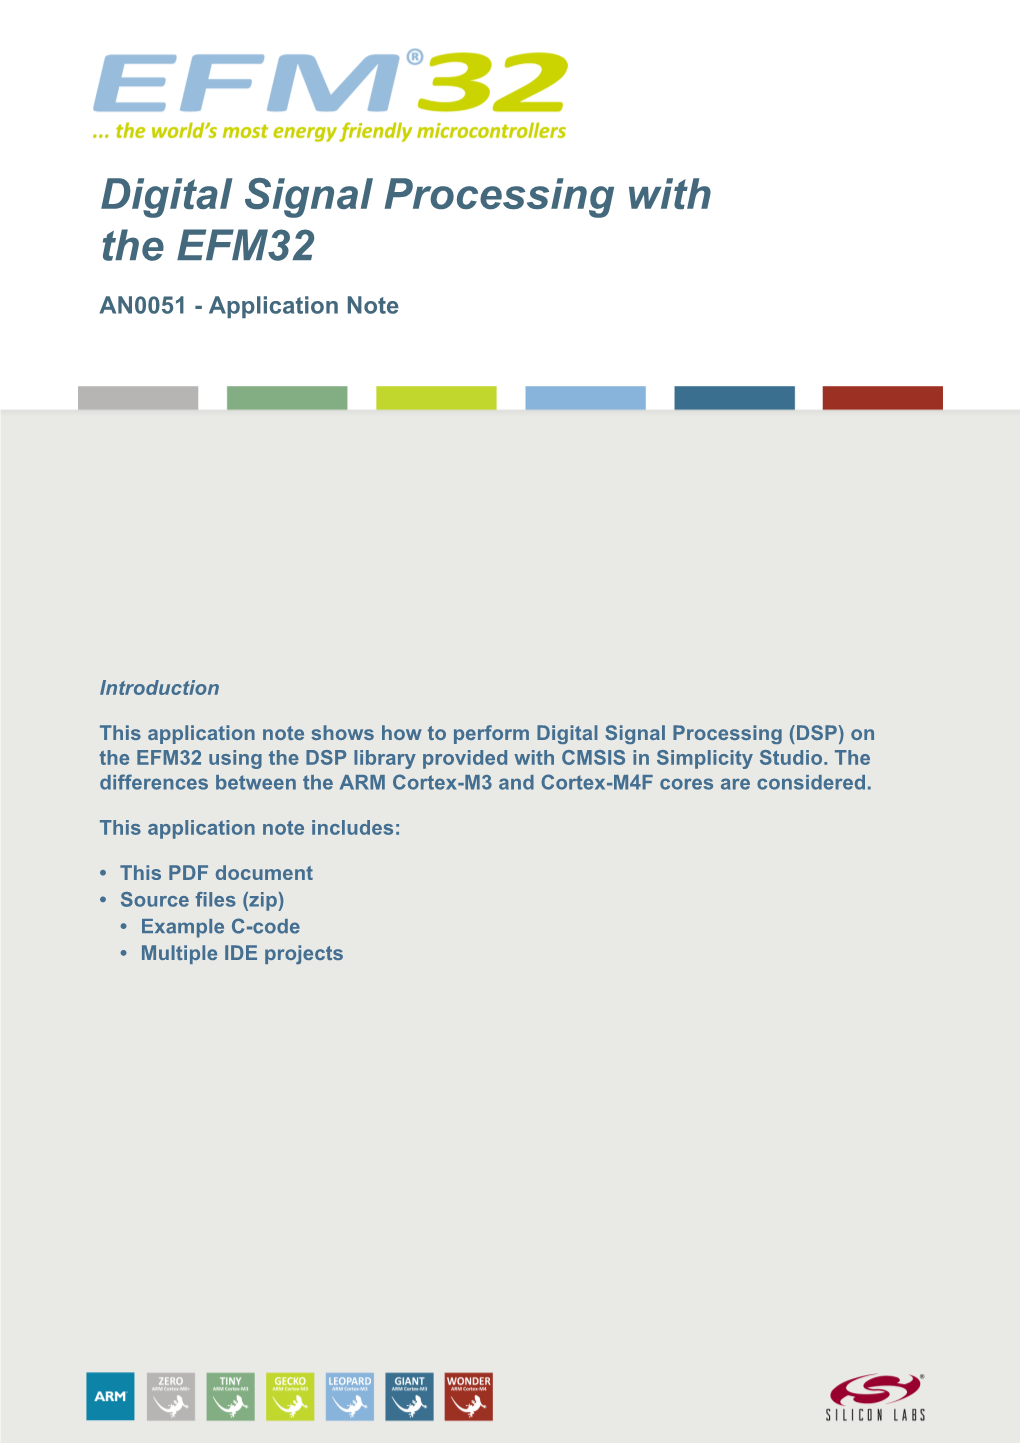 AN0051: Digital Signal Processing with EFM32